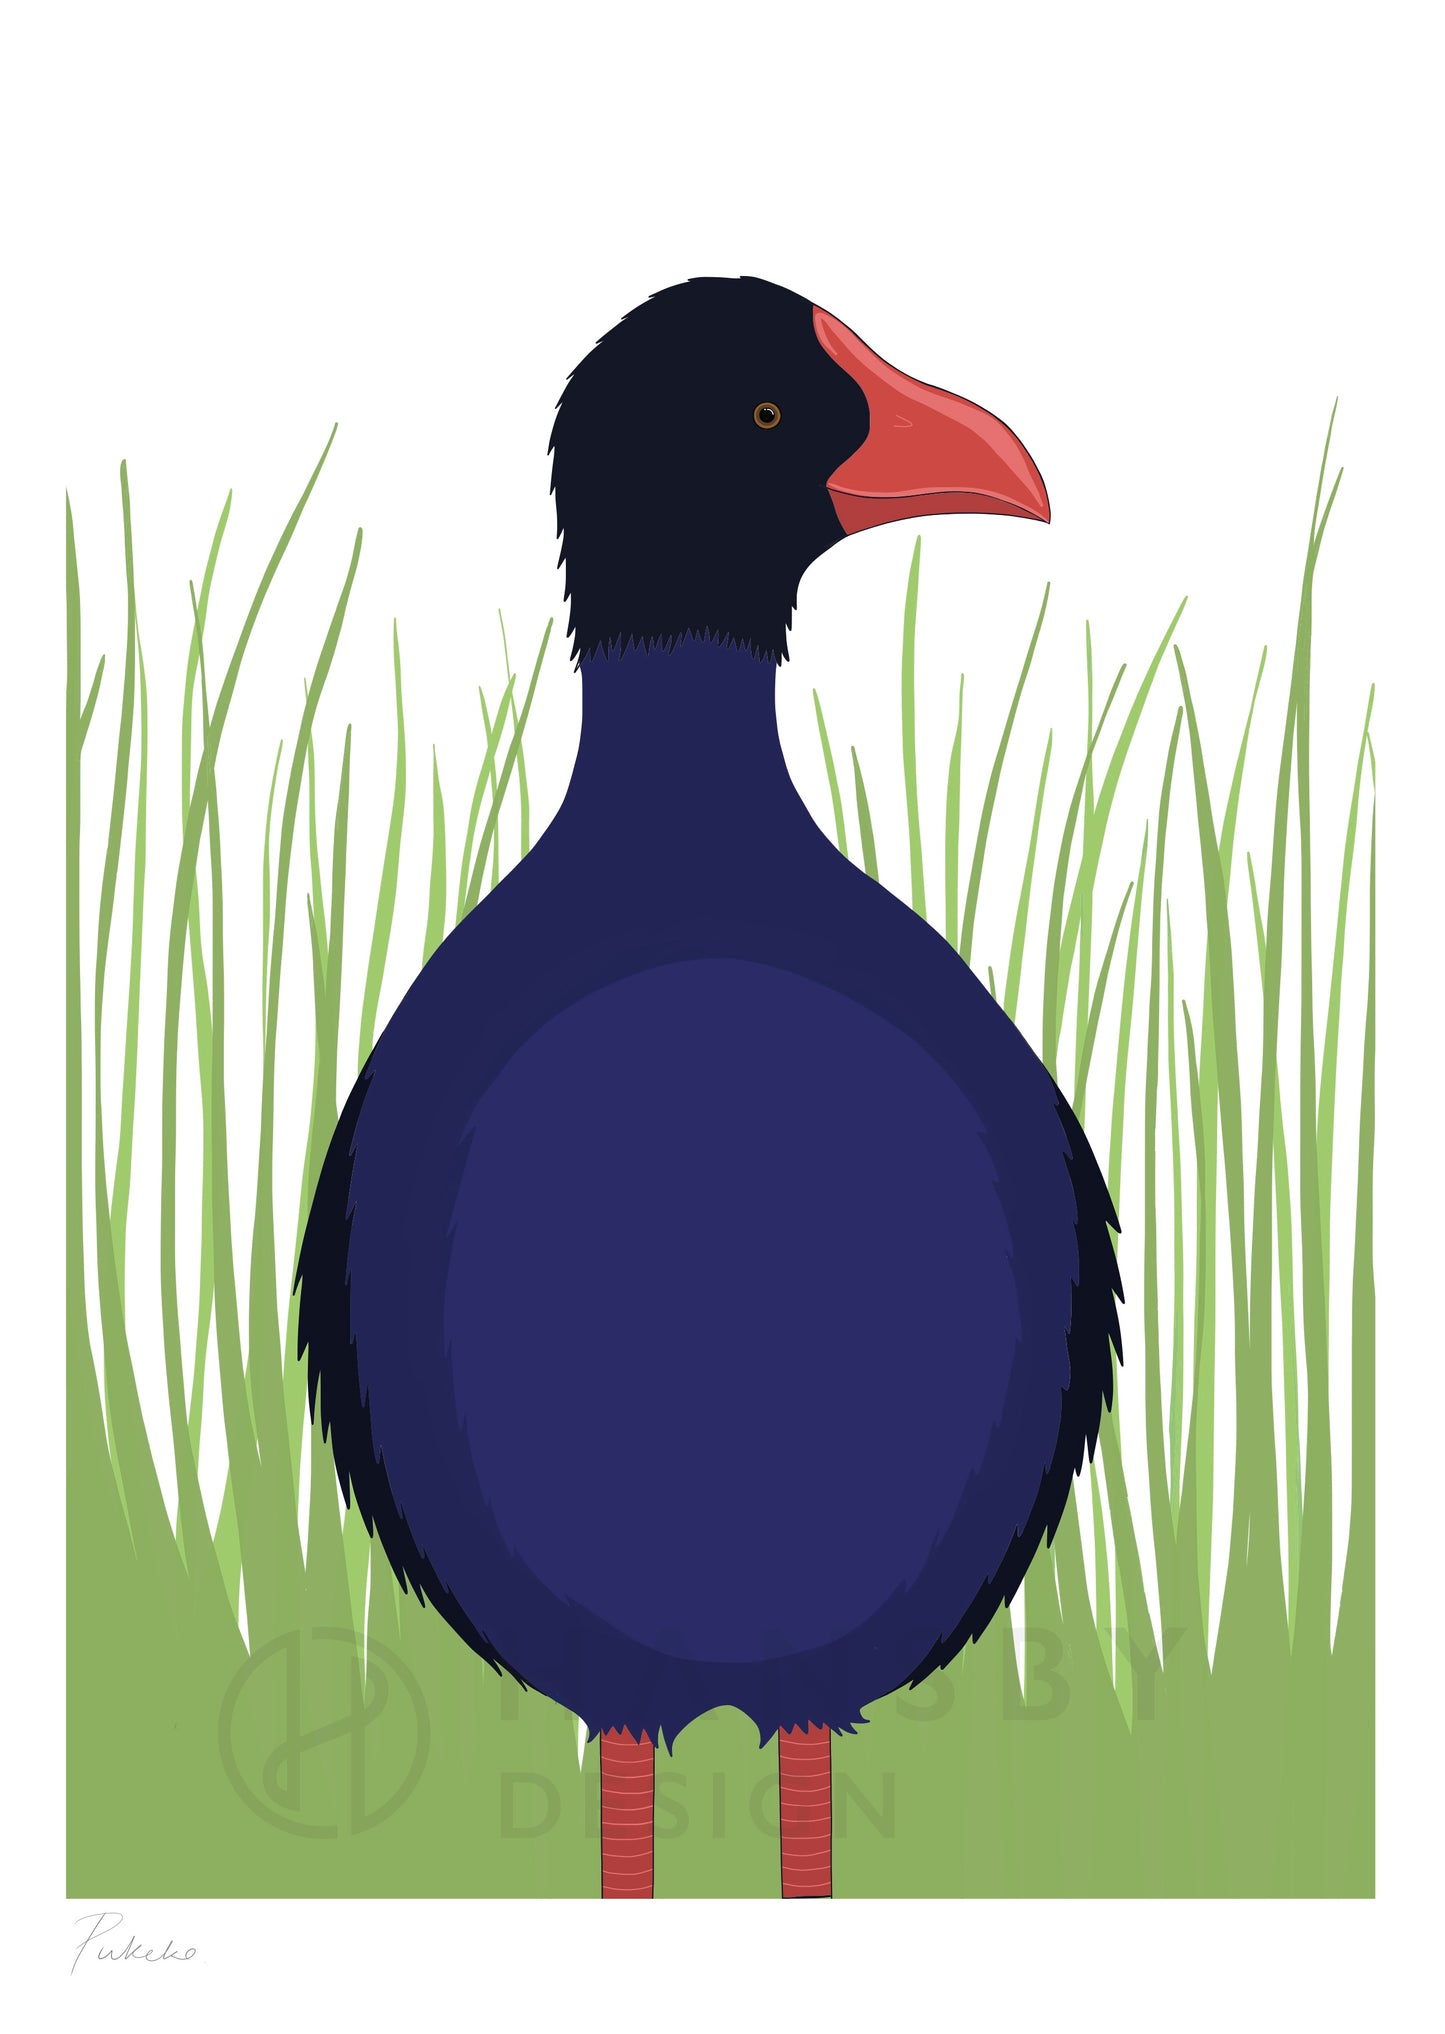 Art print of the Pukeko bird, by Hansby Design New Zealand